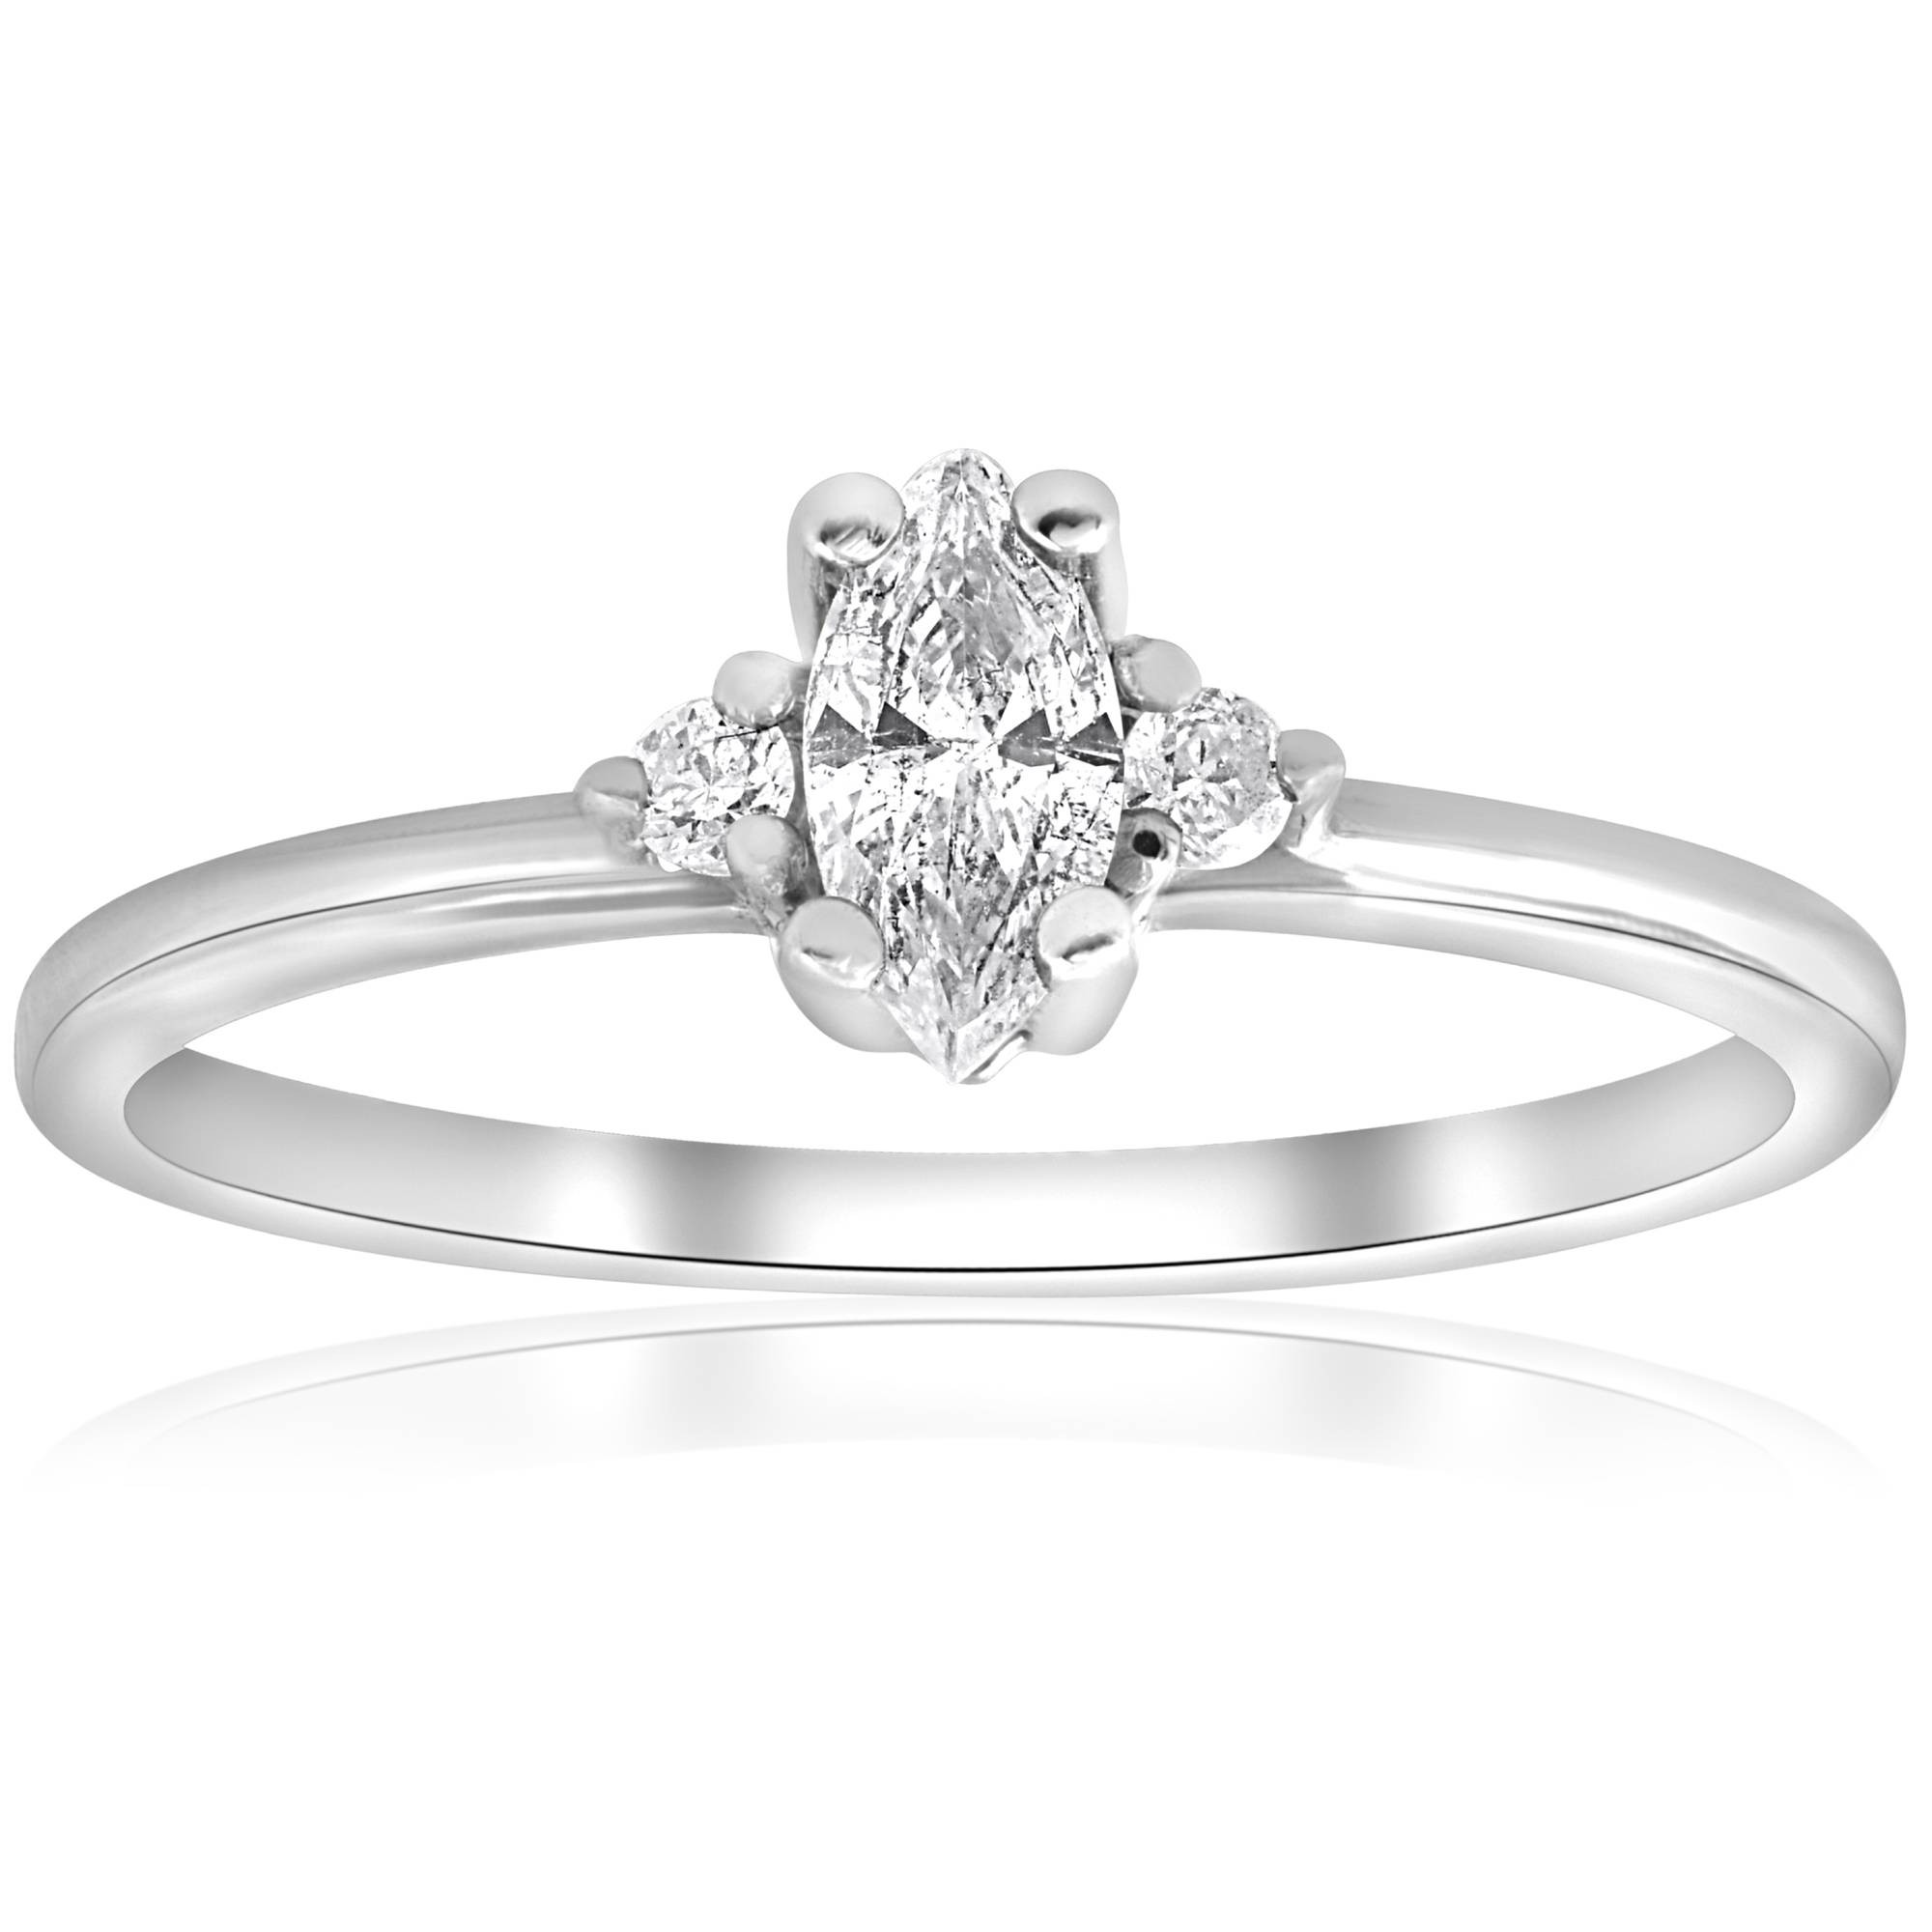 Marquise Diamond Engagement Ring
 Marquise Diamond Three Stone Engagement Ring 1 3 ct 10k